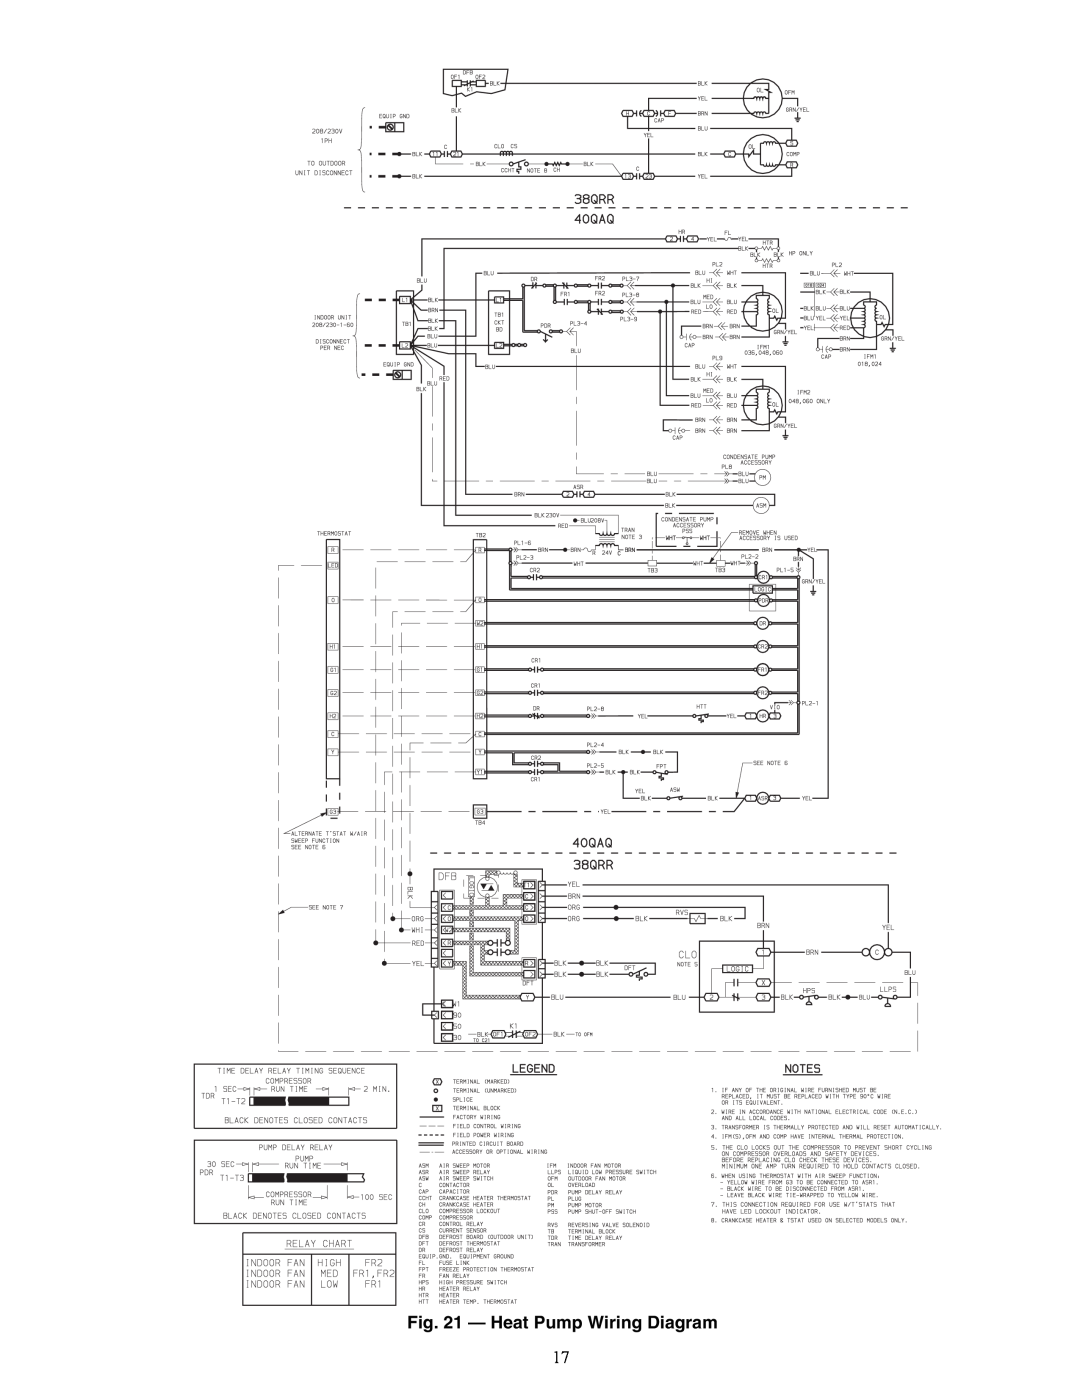 Carrier 40QA024-060 specifications Heat Pump Wiring Diagram 